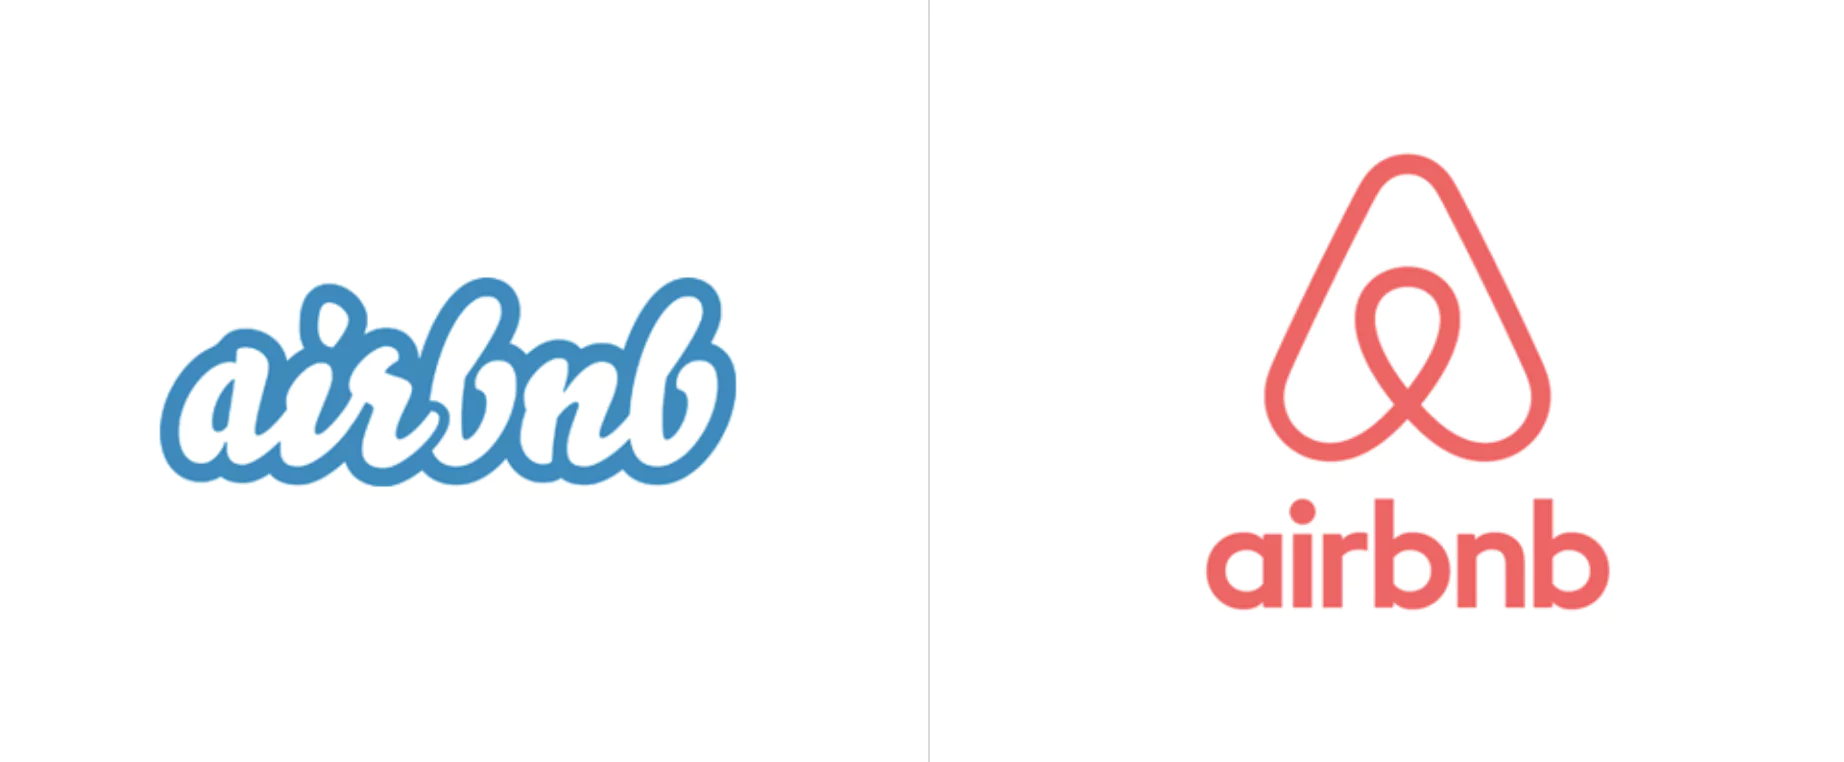 Airbnb ロゴの比較: 左側が古い白/青のロゴ、右側がハートハウスのシンボルが付いた新しいピンク/赤のロゴ